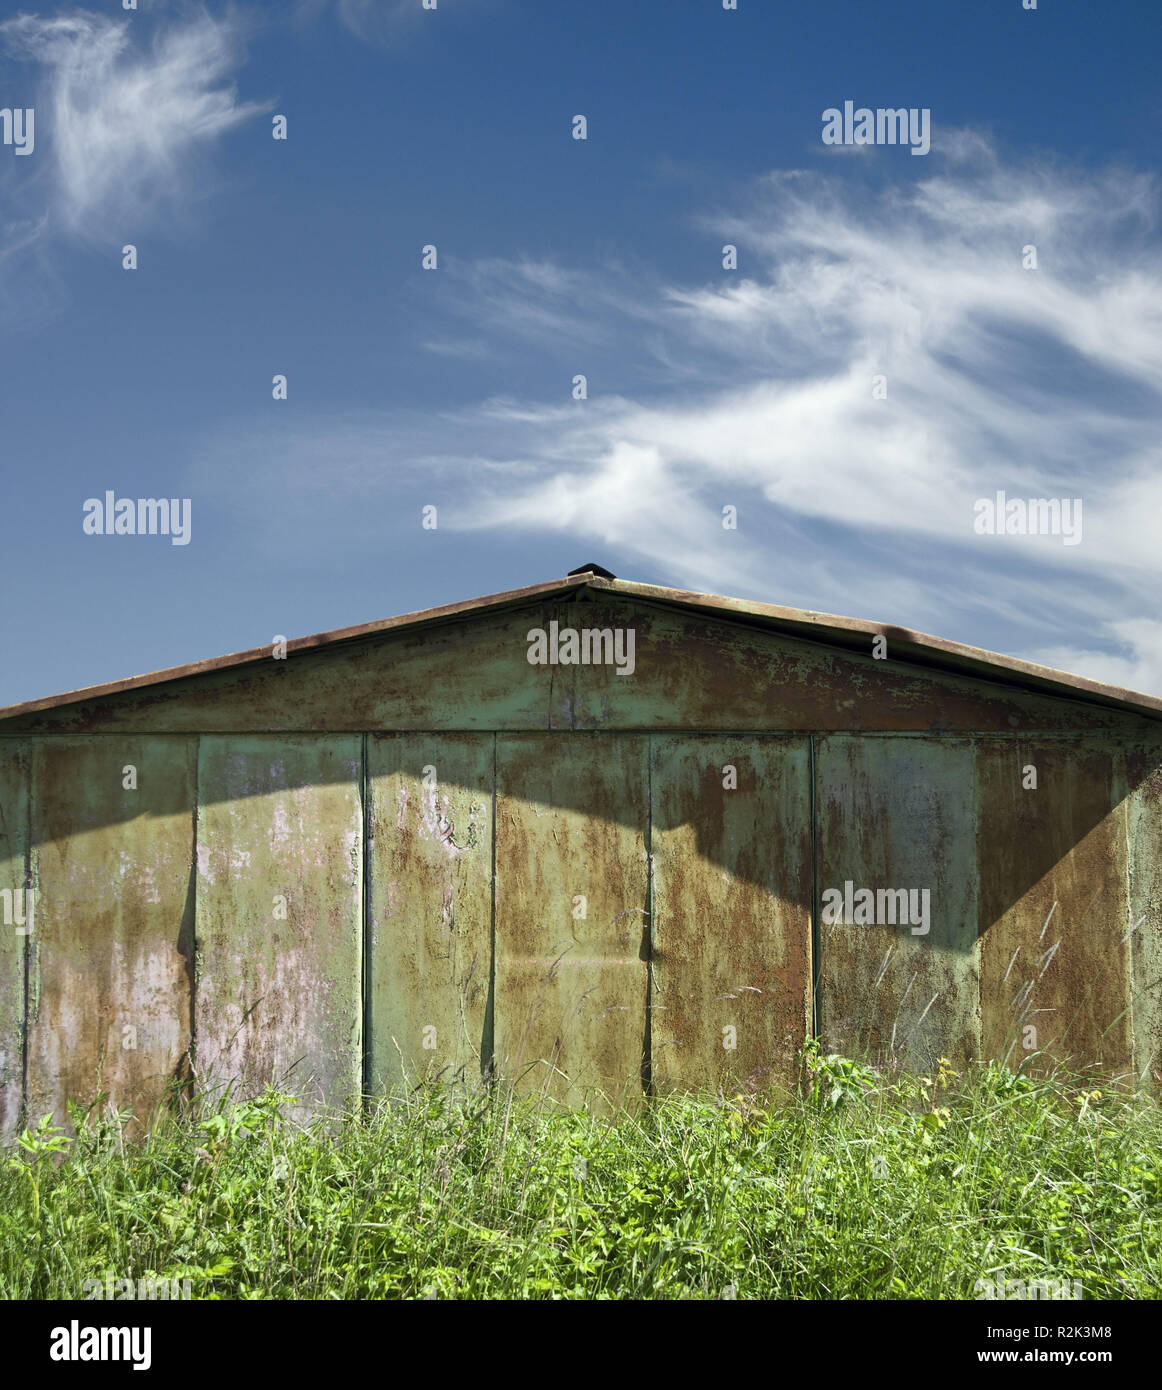 Old rusty barn, grass, cloudy sky, sunny day, Stock Photo